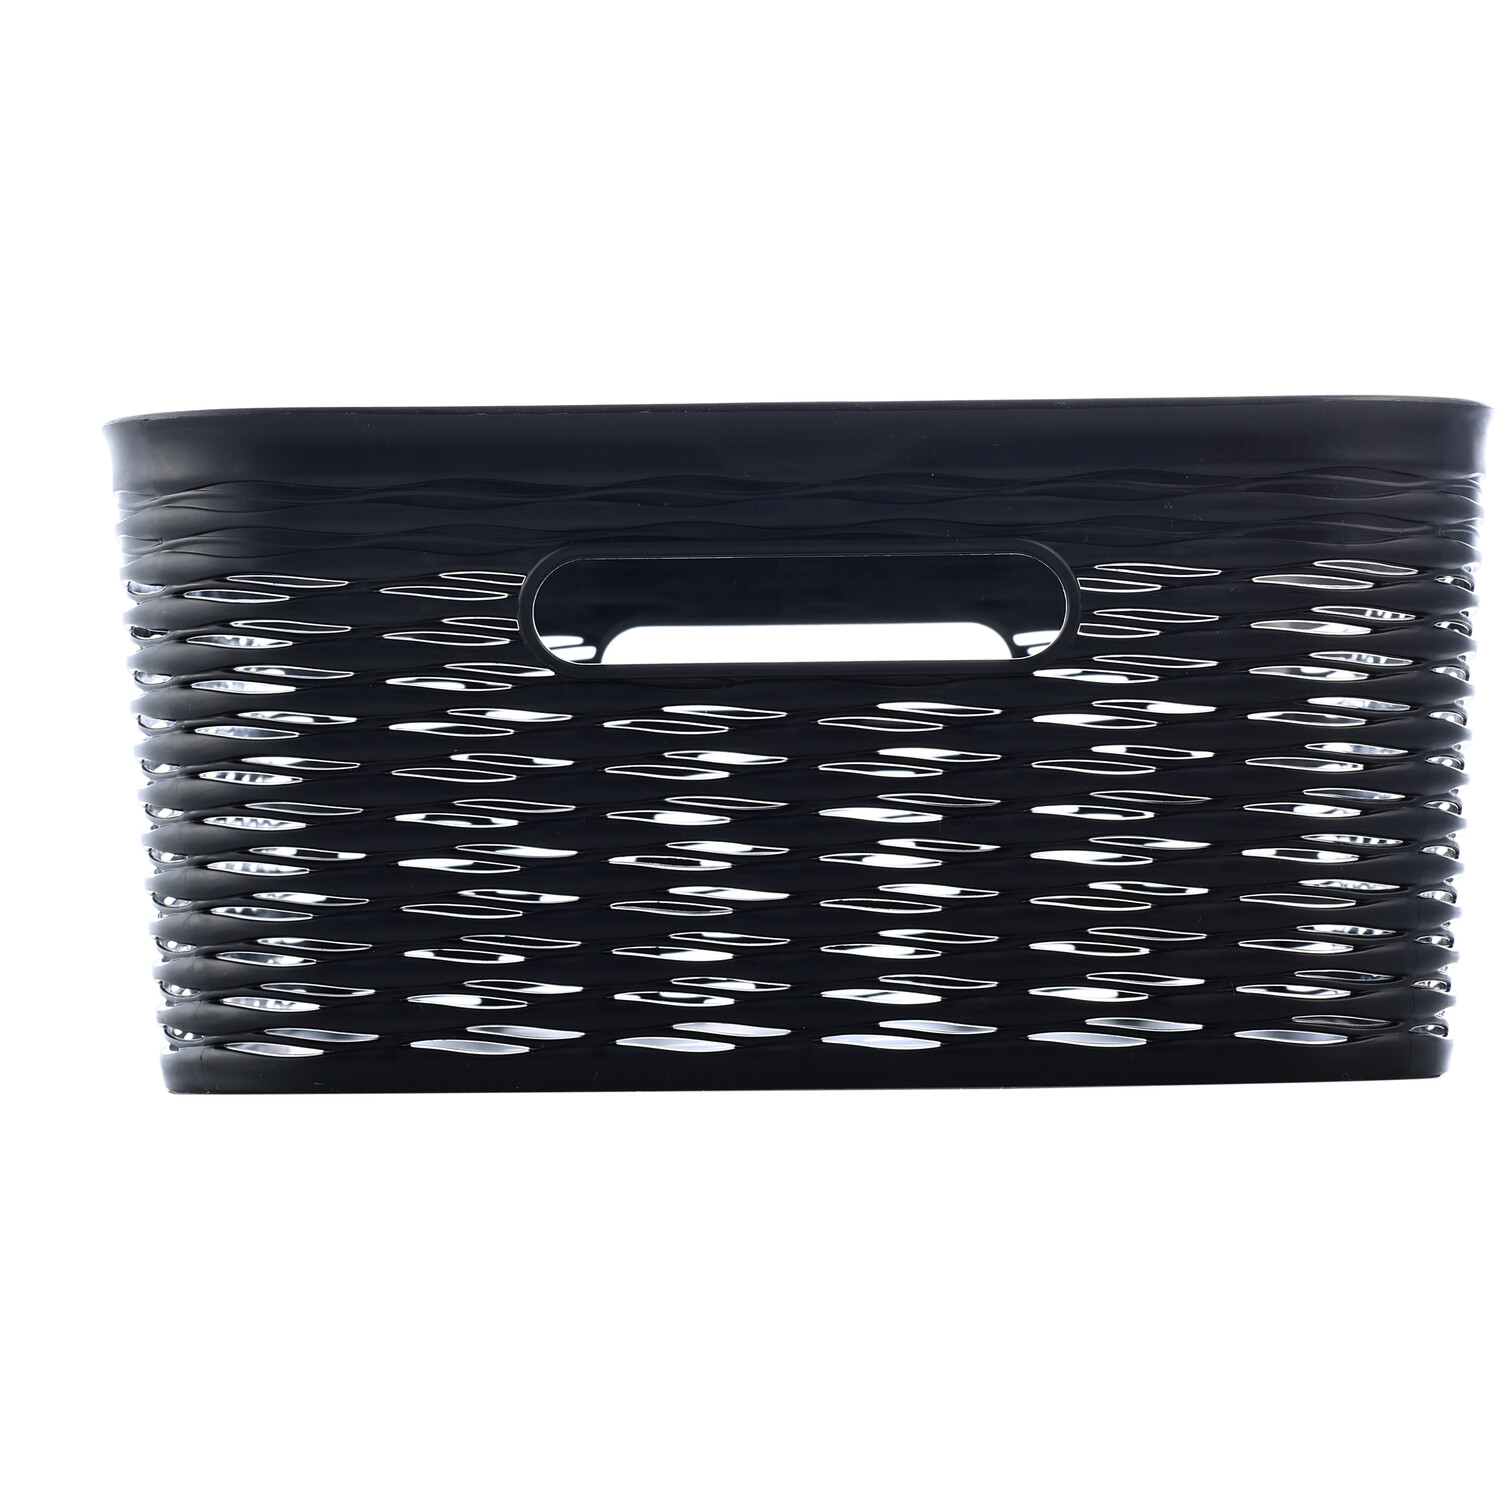 11L Black Wave Laundry Basket Image 3